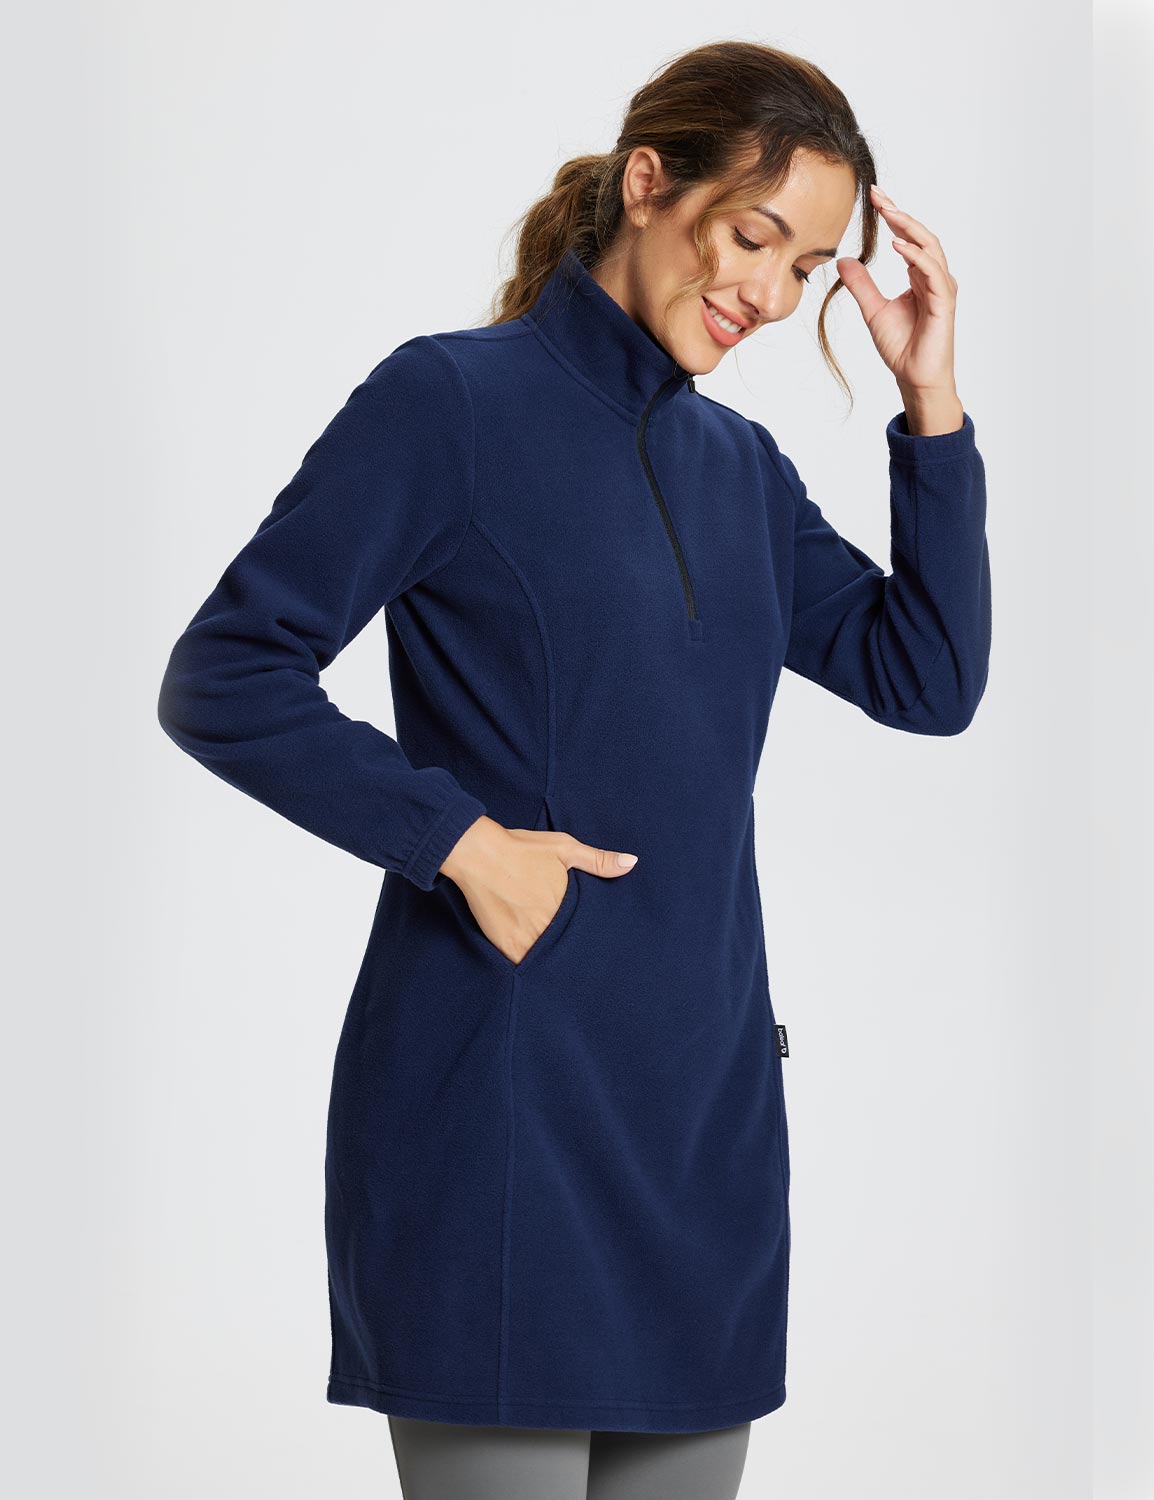 Baleaf Women's Long-Sleeve Quarter Zip Thermal Dress dga069 Navy Blue Side